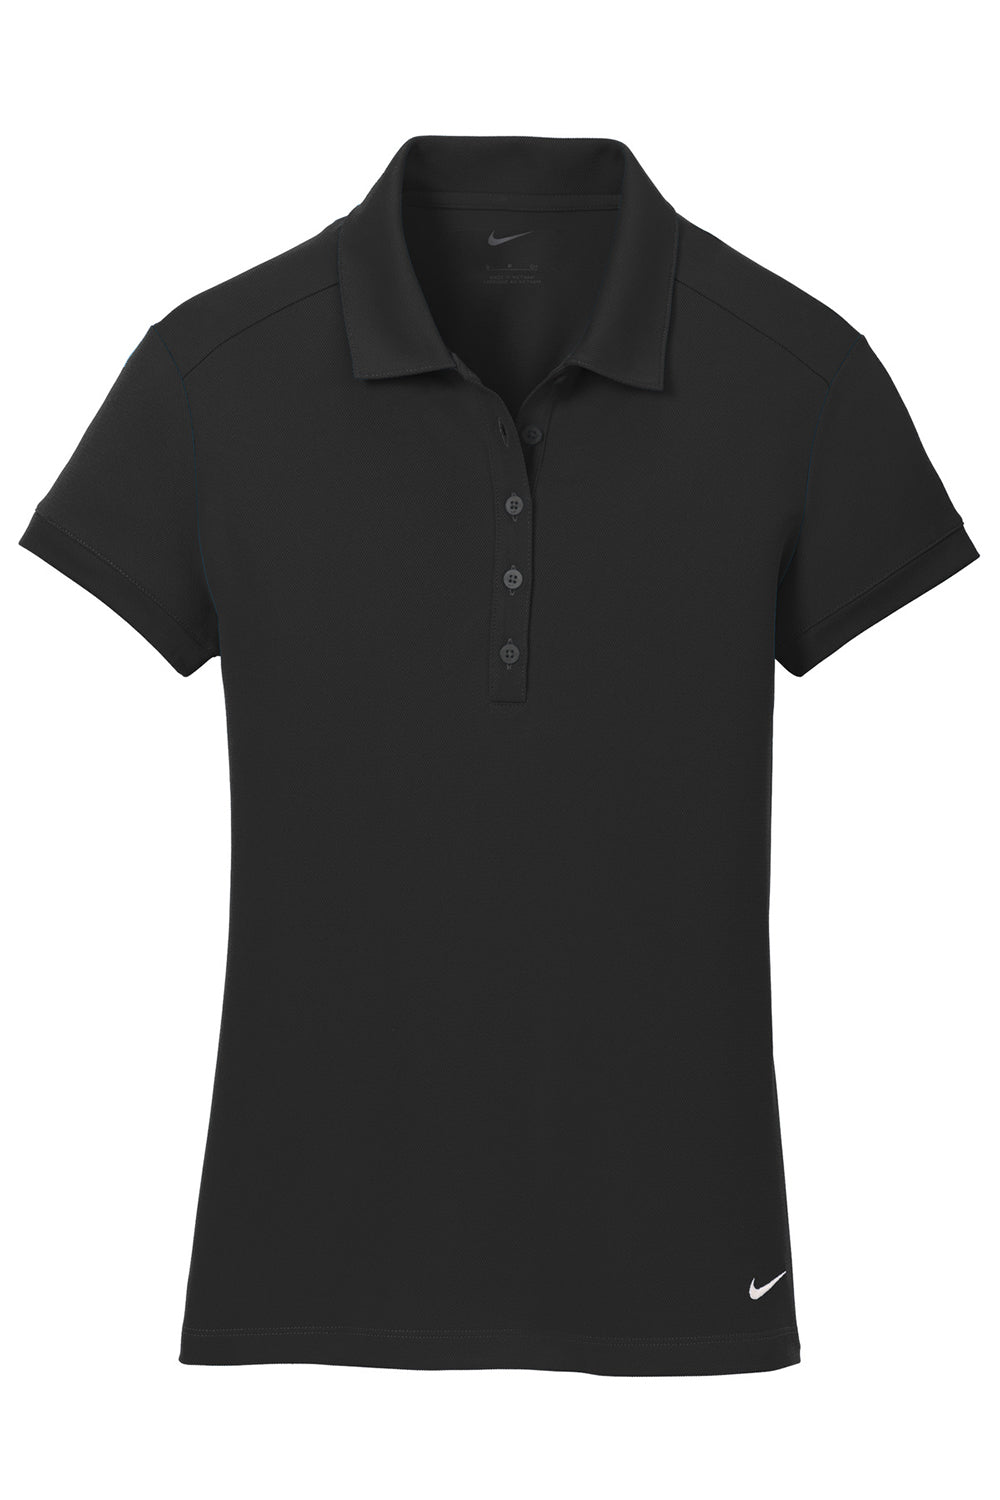 Nike 746100 Womens Icon Dri-Fit Moisture Wicking Short Sleeve Polo Shirt Black Flat Front